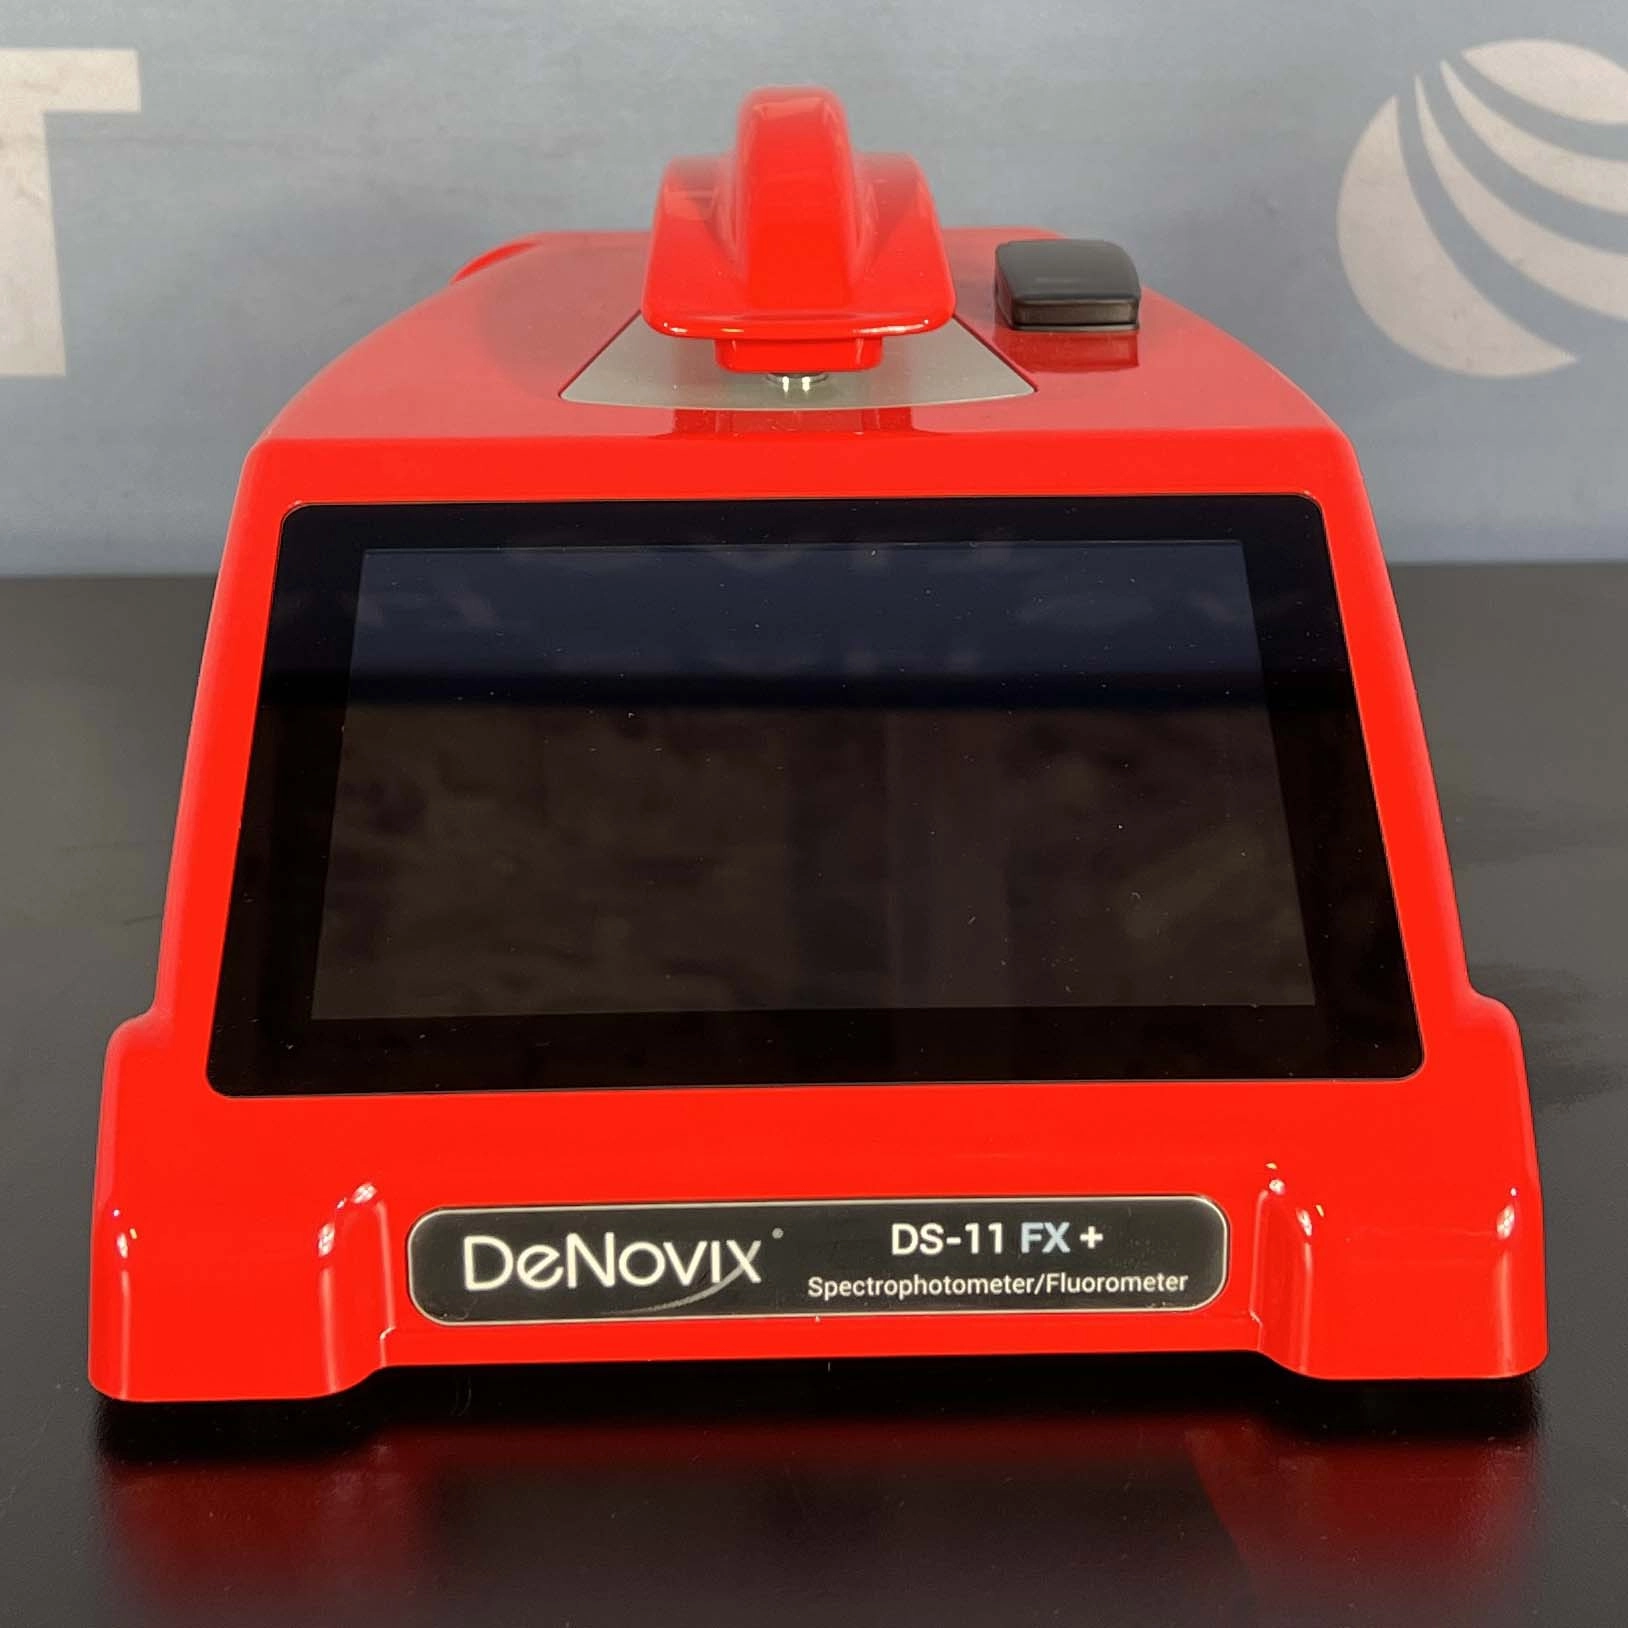 DeNovix DS-11 FX+ Spectrophotometer/Fluorometer